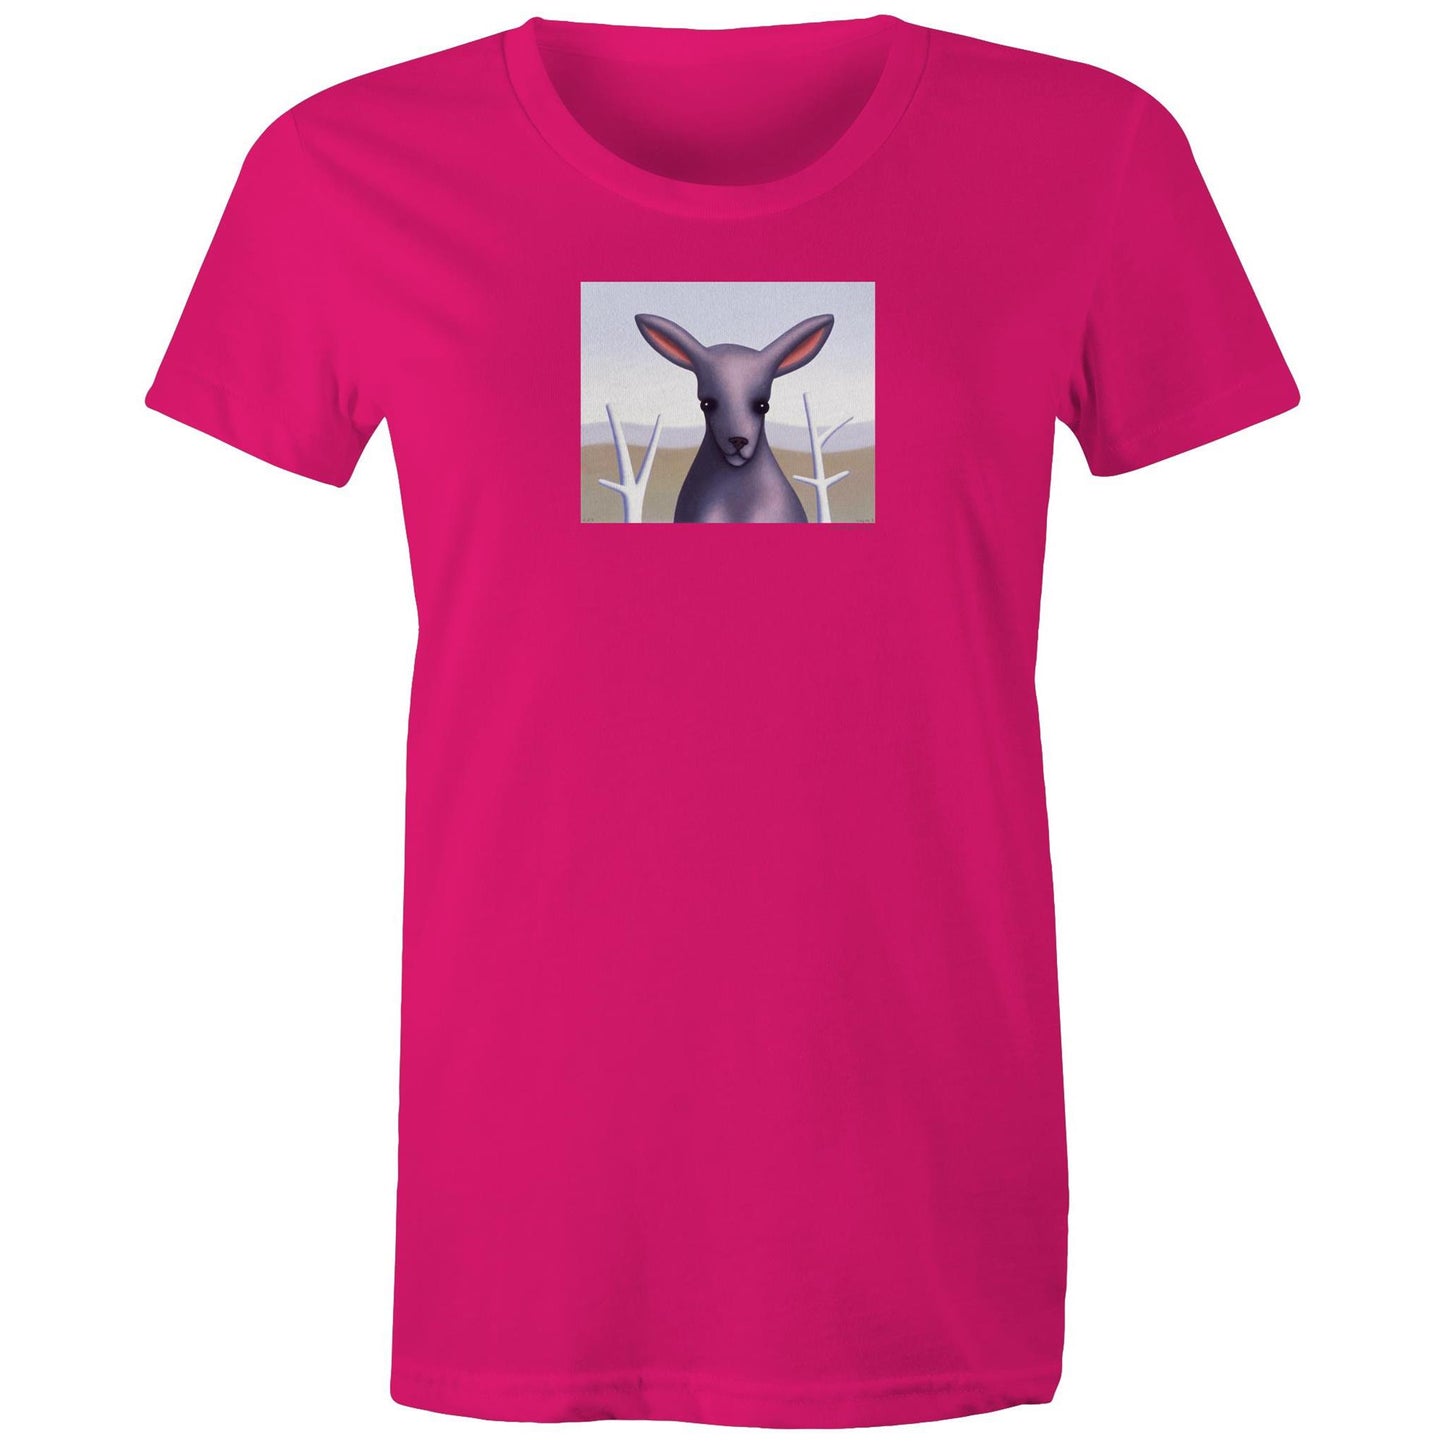 Fluffy the Slightly Pink Kangaroo T Shirts for Women